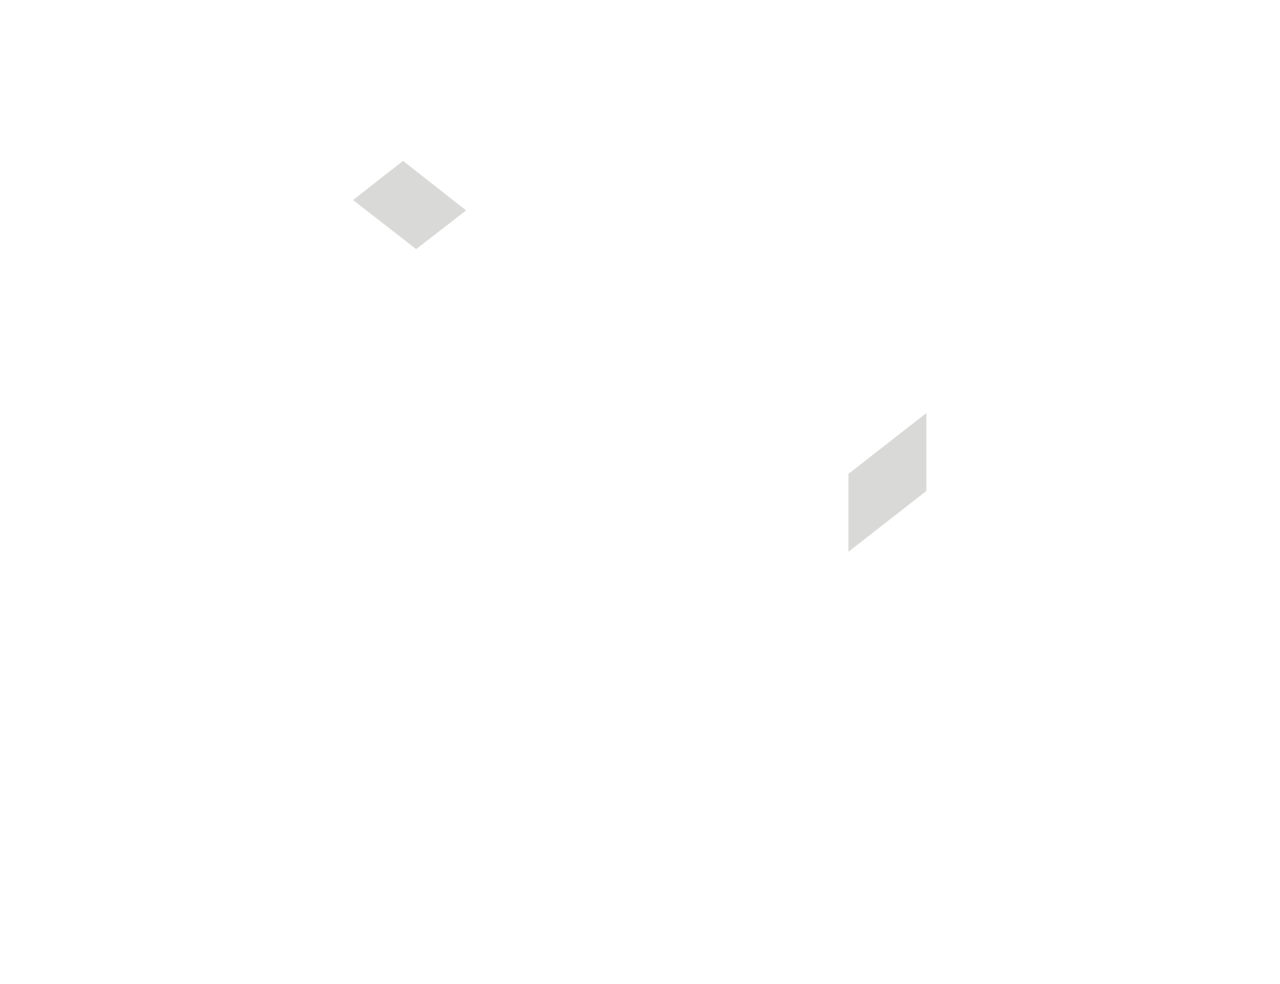 A-STAR PROPERTY
IMPROVEMENT's web page